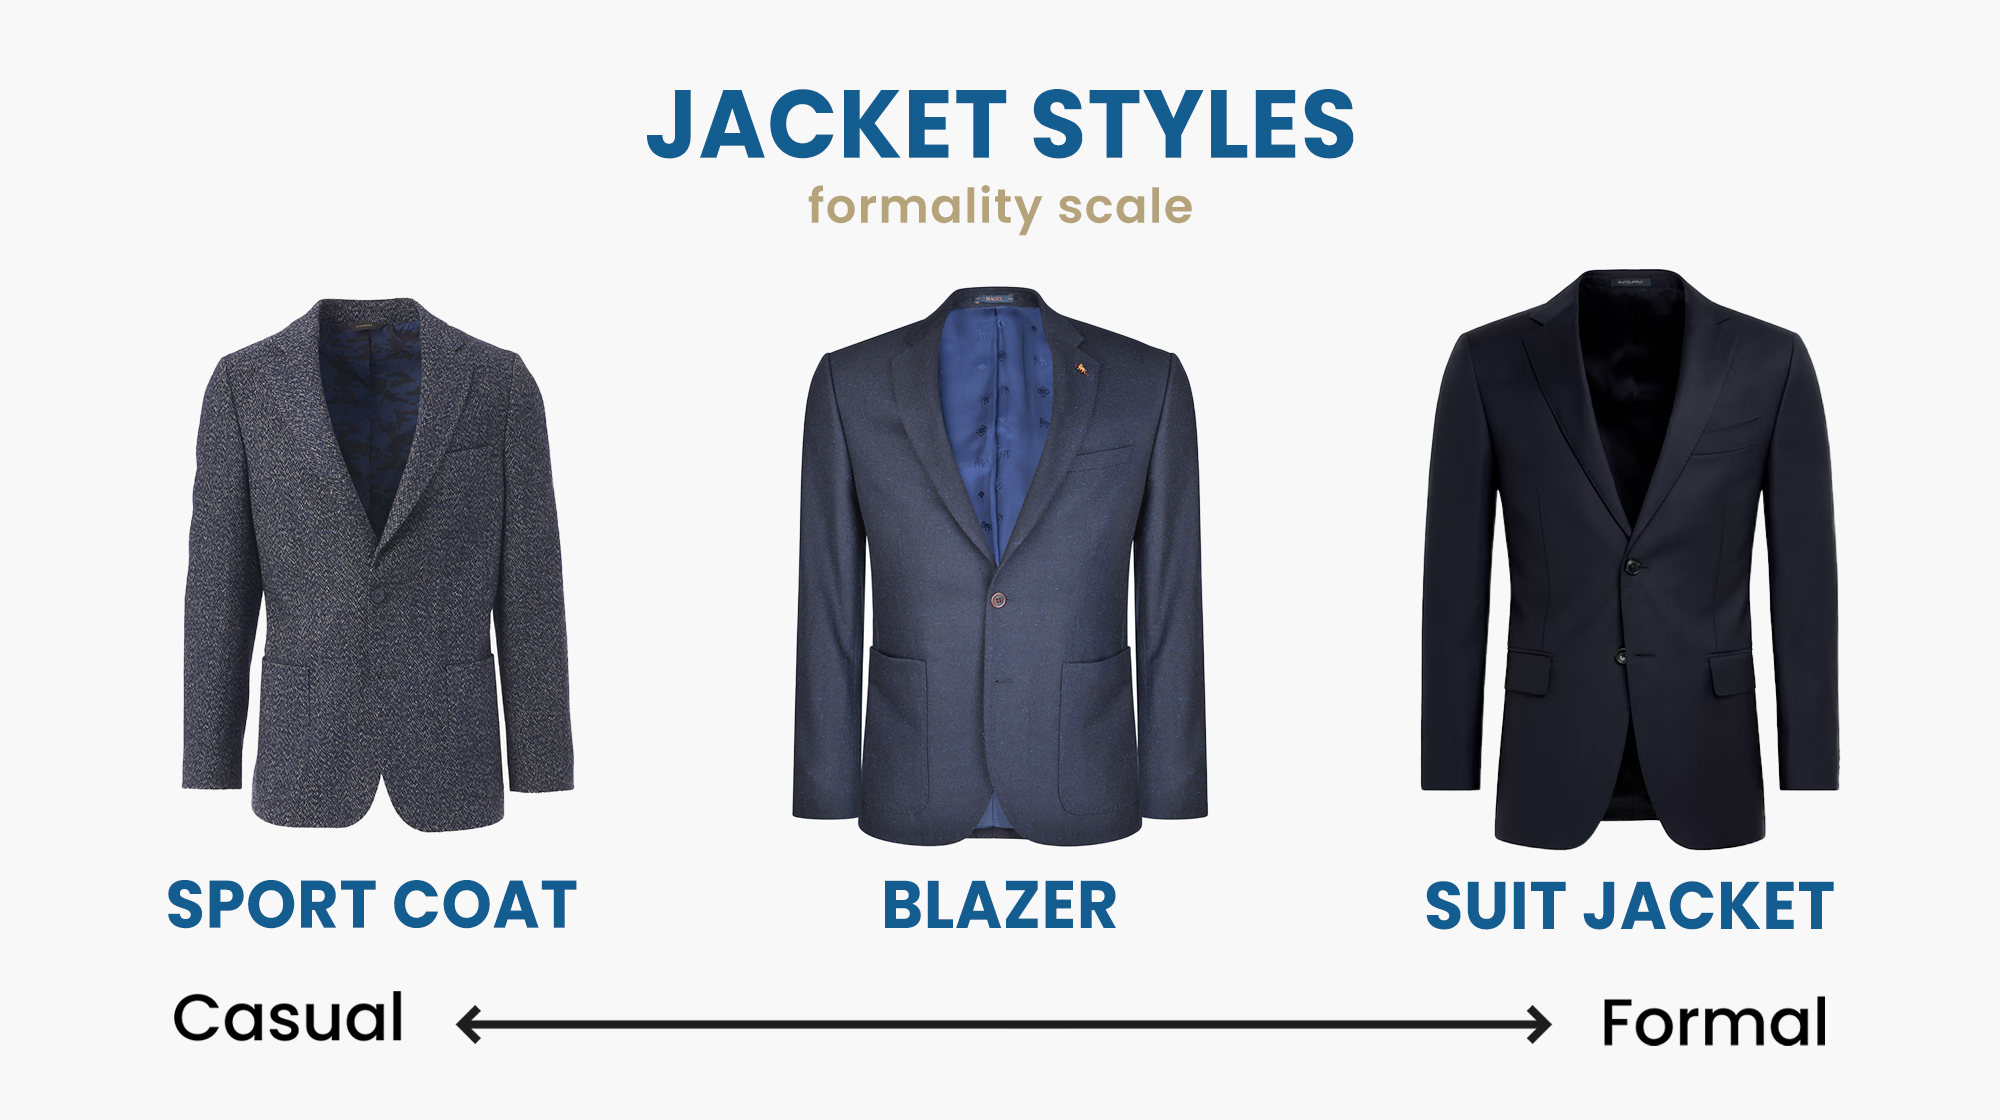 Sport Coats and Blazers